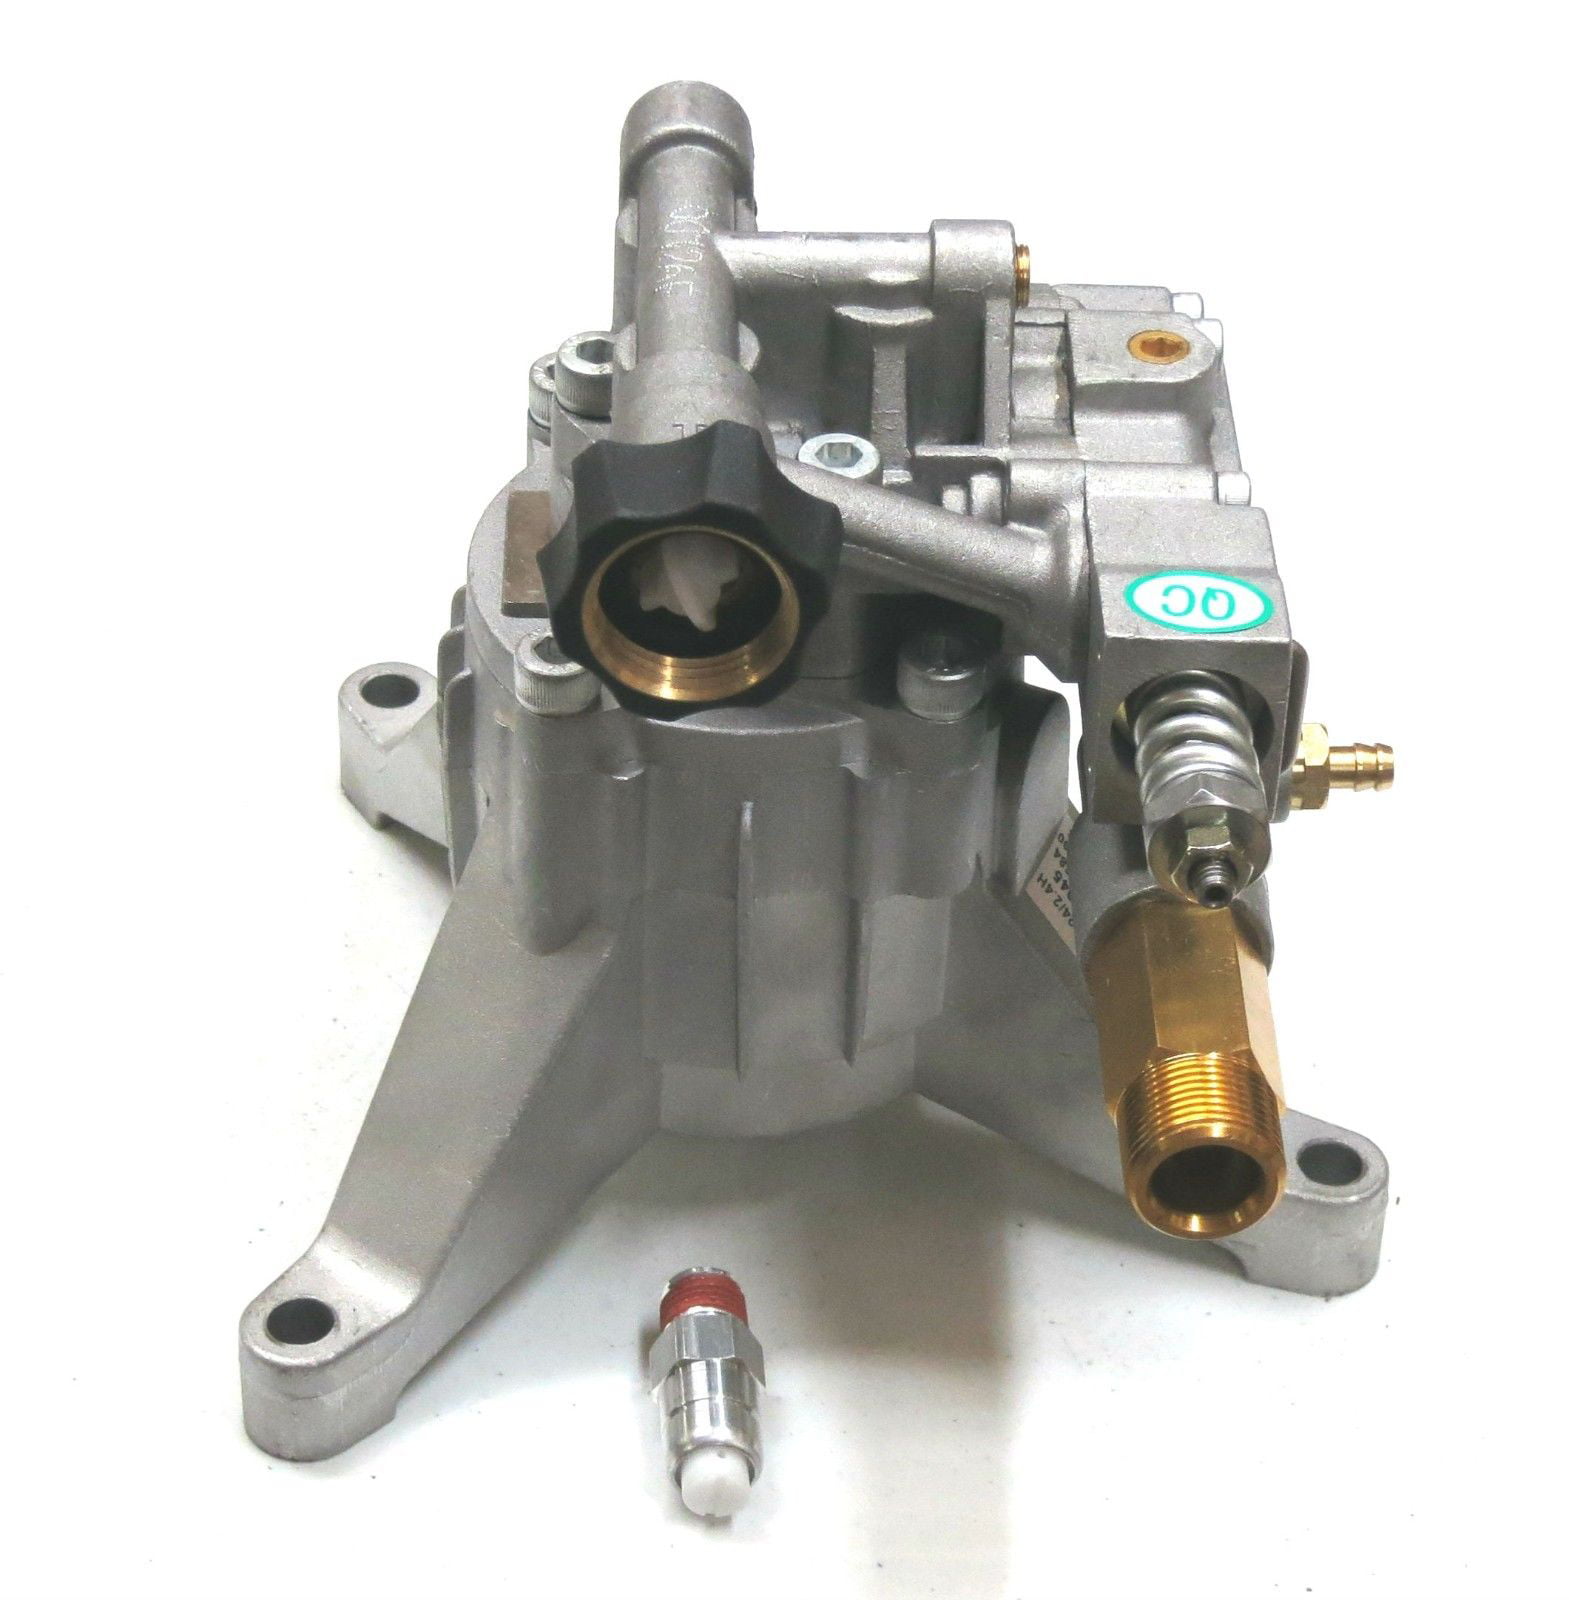 Generac New PUMP SAVER for Generac Briggs Craftsman Power Pressure Washer Pump 2800 psi 